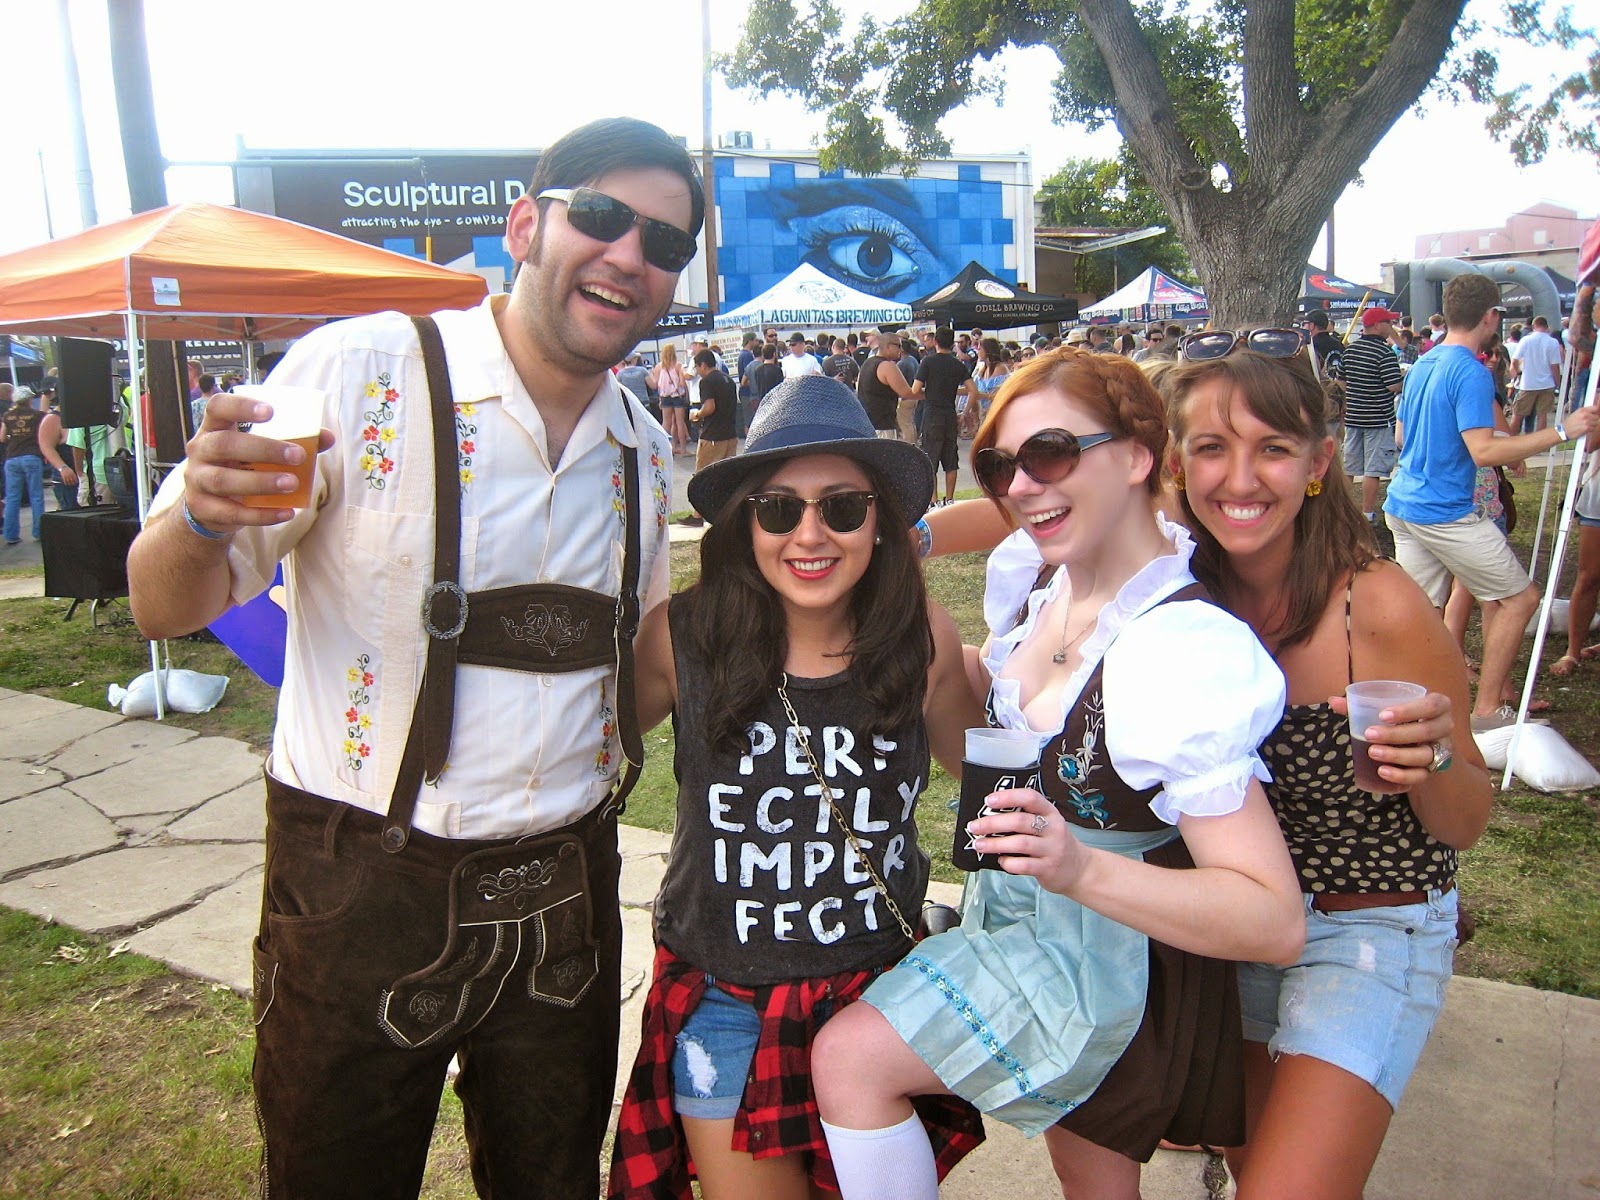 The Festival of Beer in Bayfield, September 2014